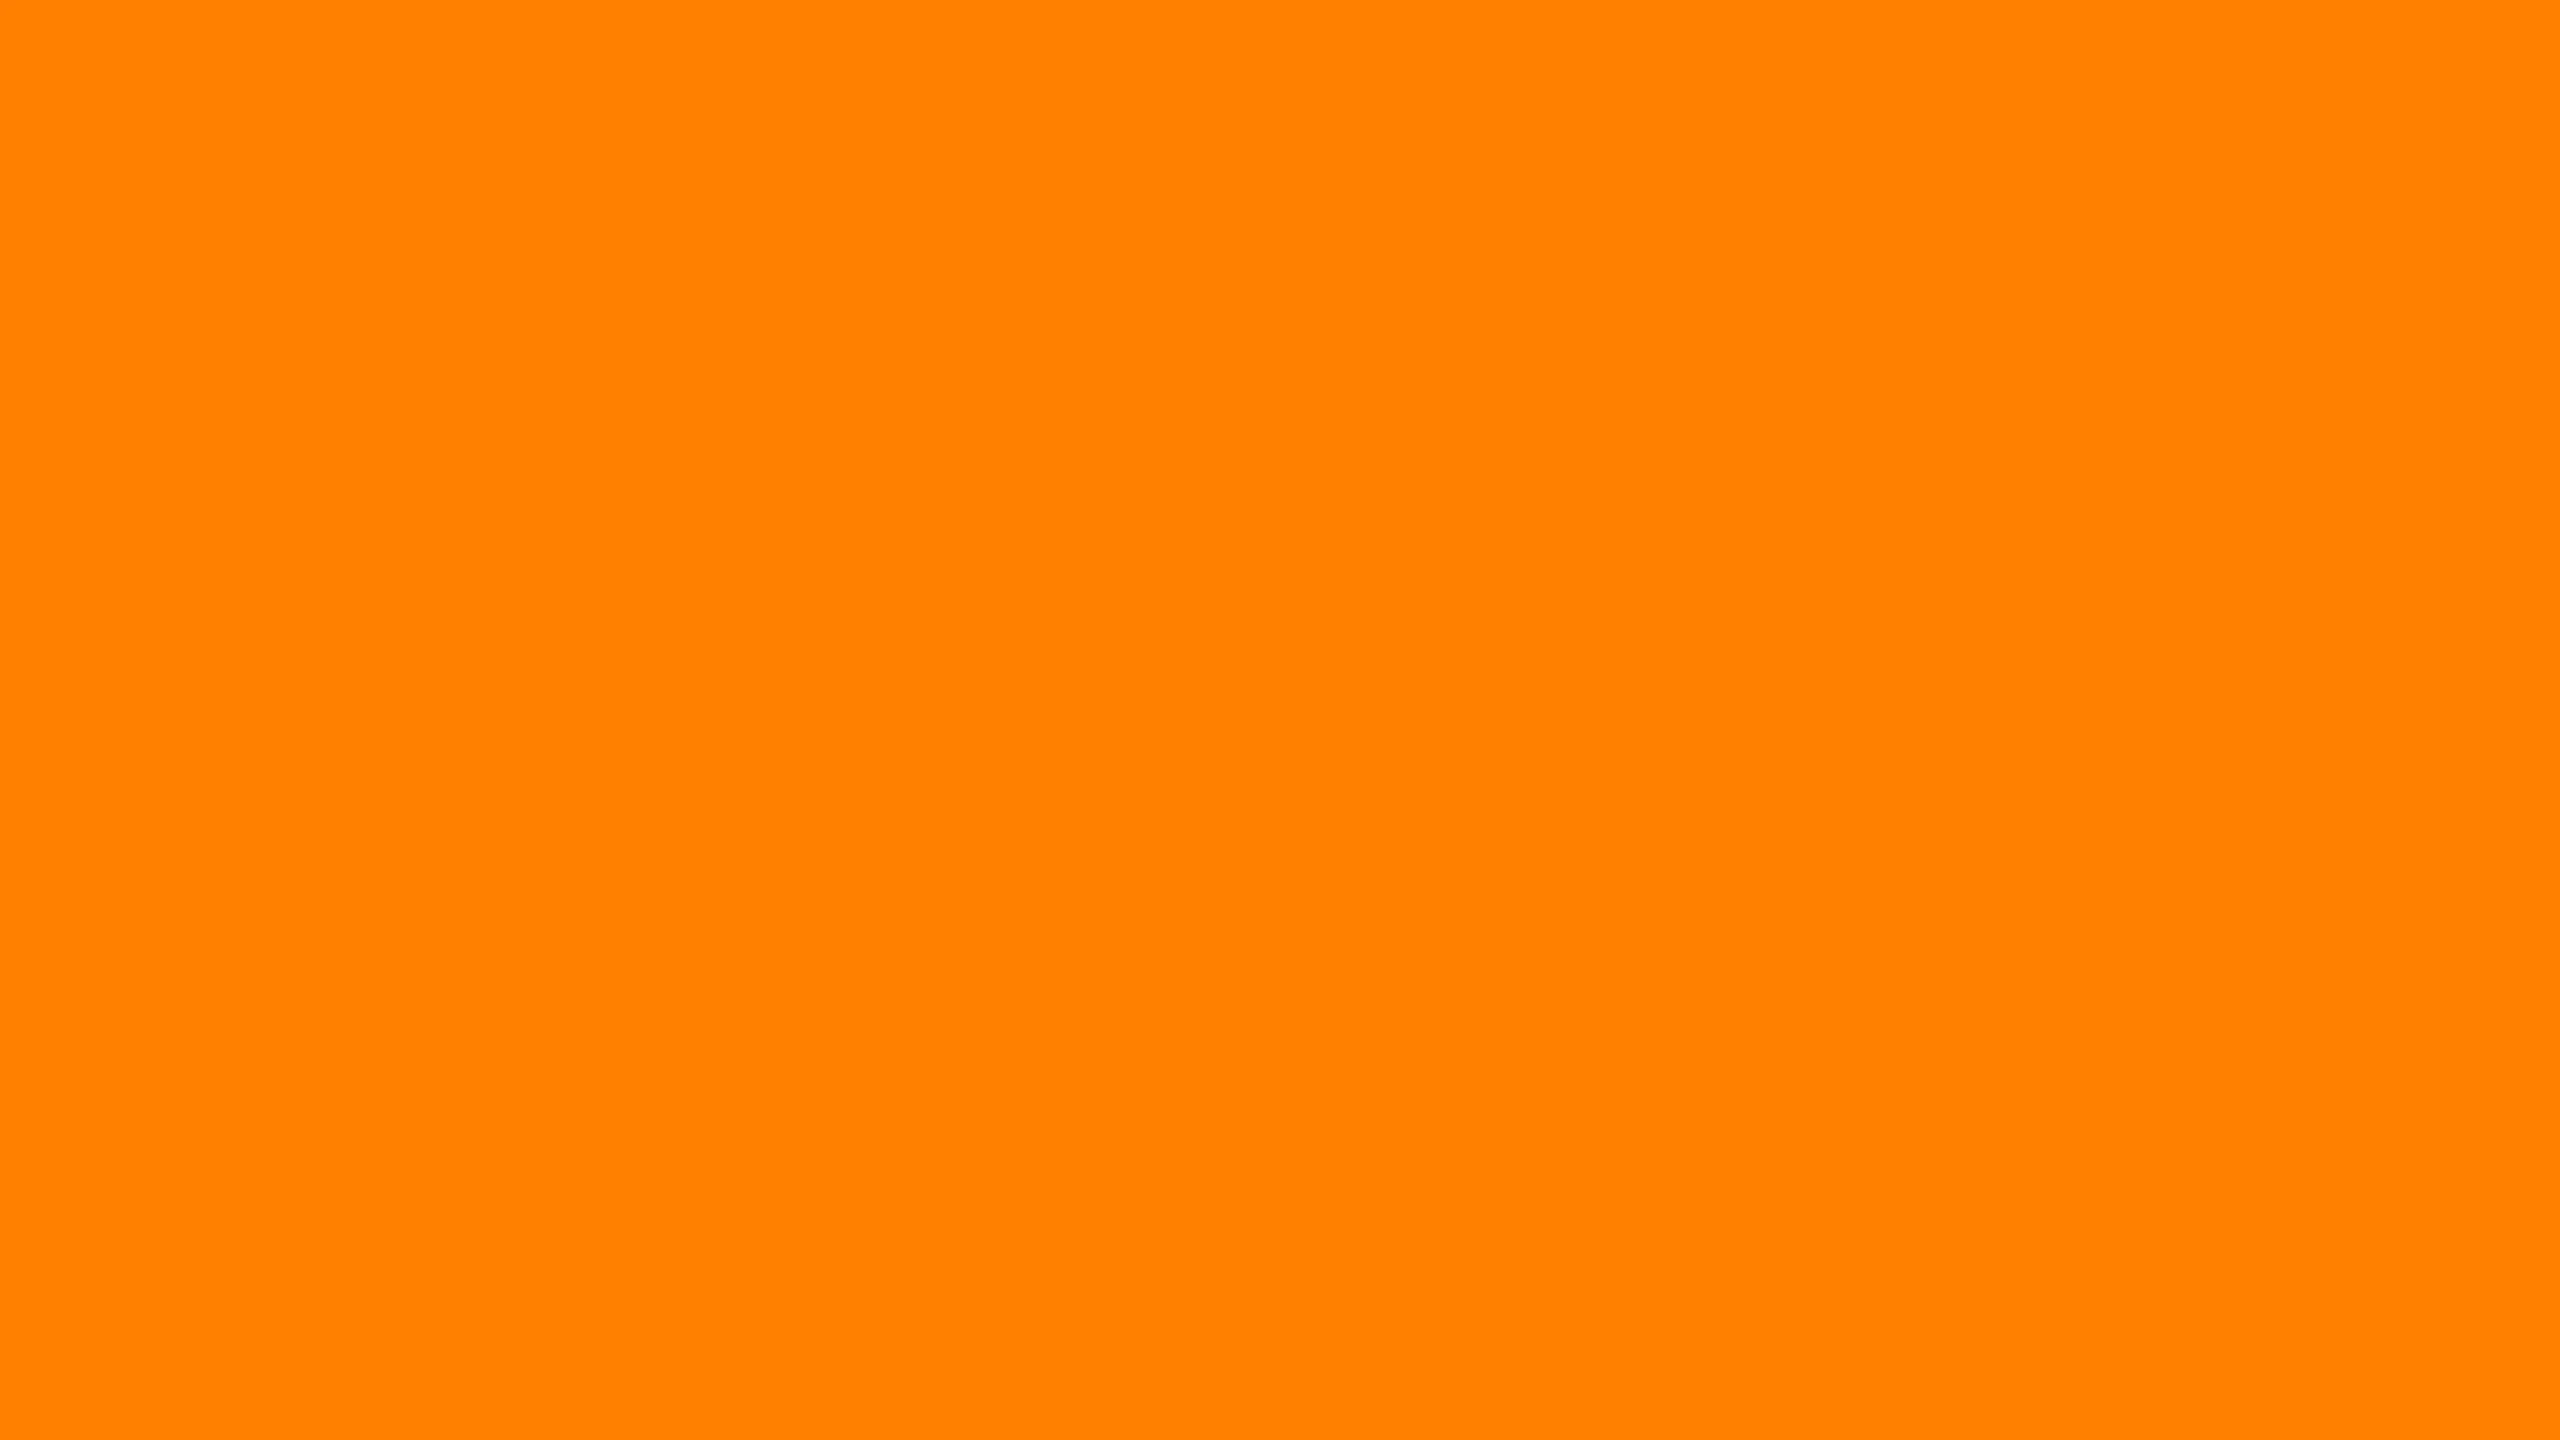 An orange background with a white border - Orange